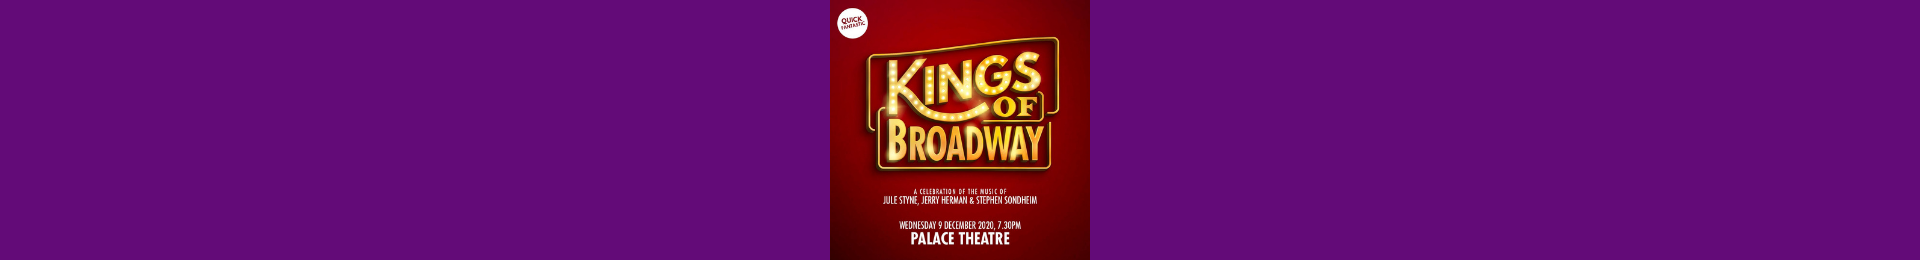 Kings of Broadway banner image